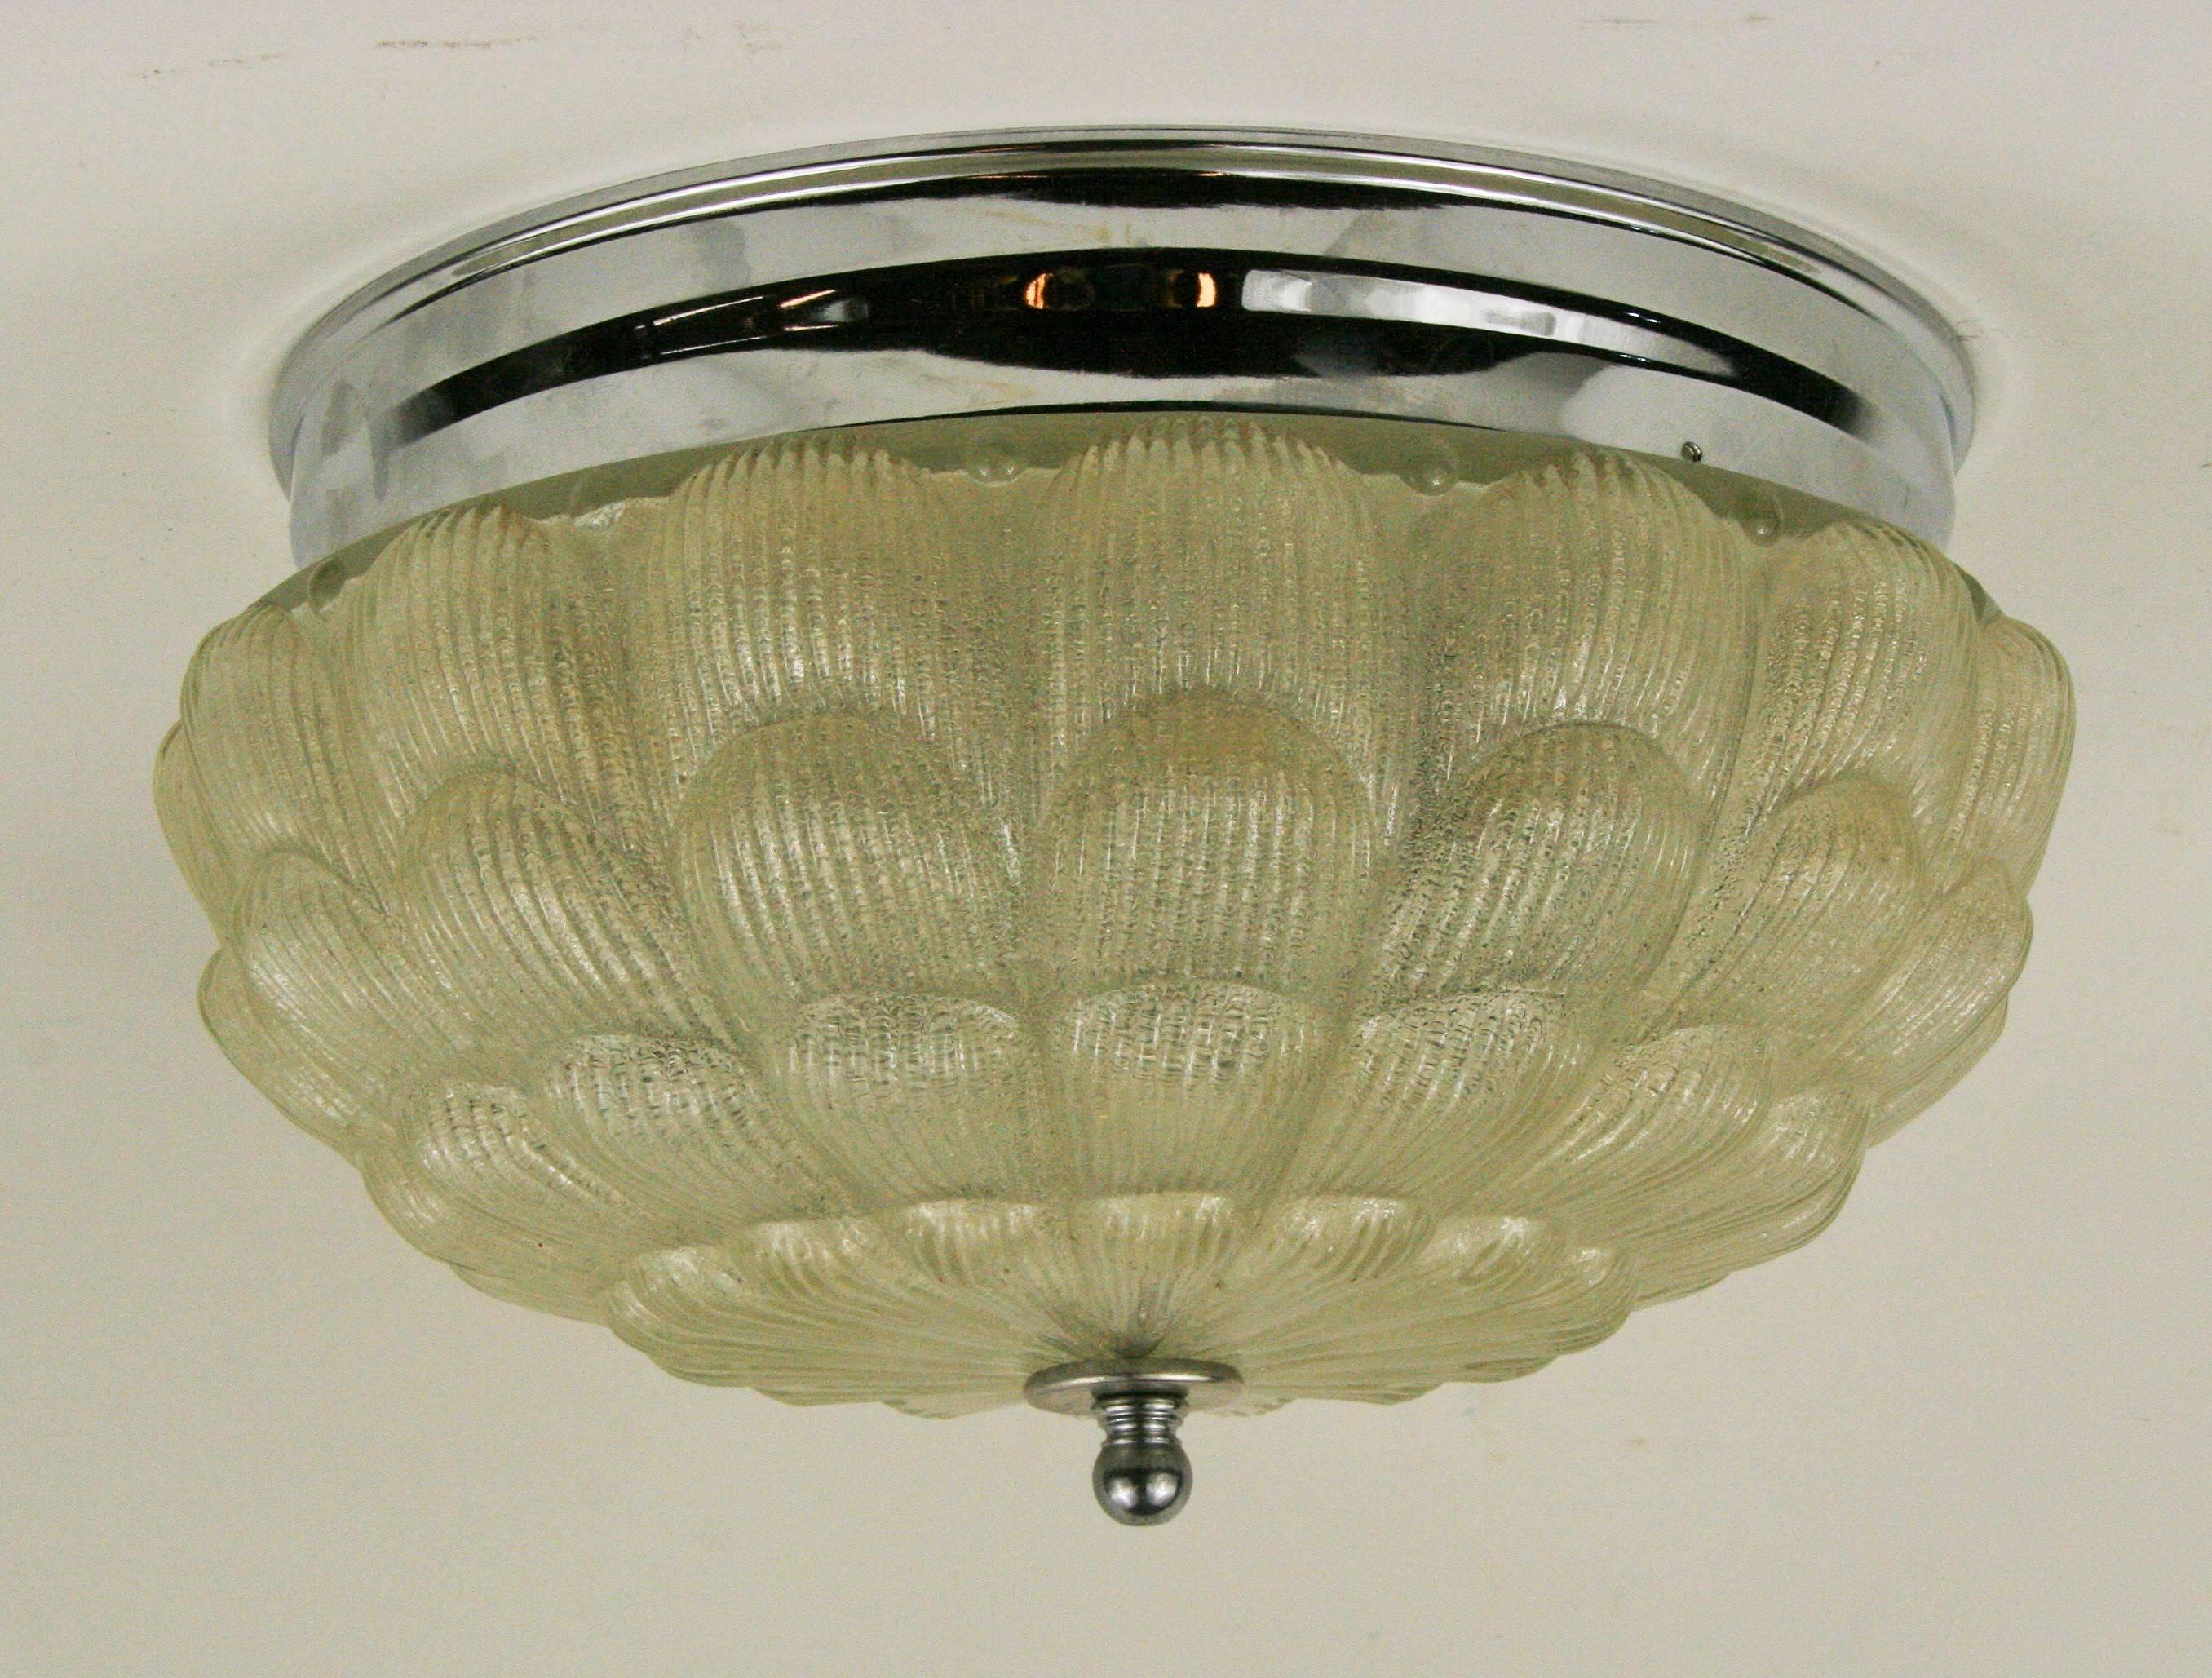 1-3030, Art Deco shell shaped flushmount.
Takes two 60 watt Edison based bulbs.
NO ADDITIONAL DISCOUNTS ON SALE ITEM